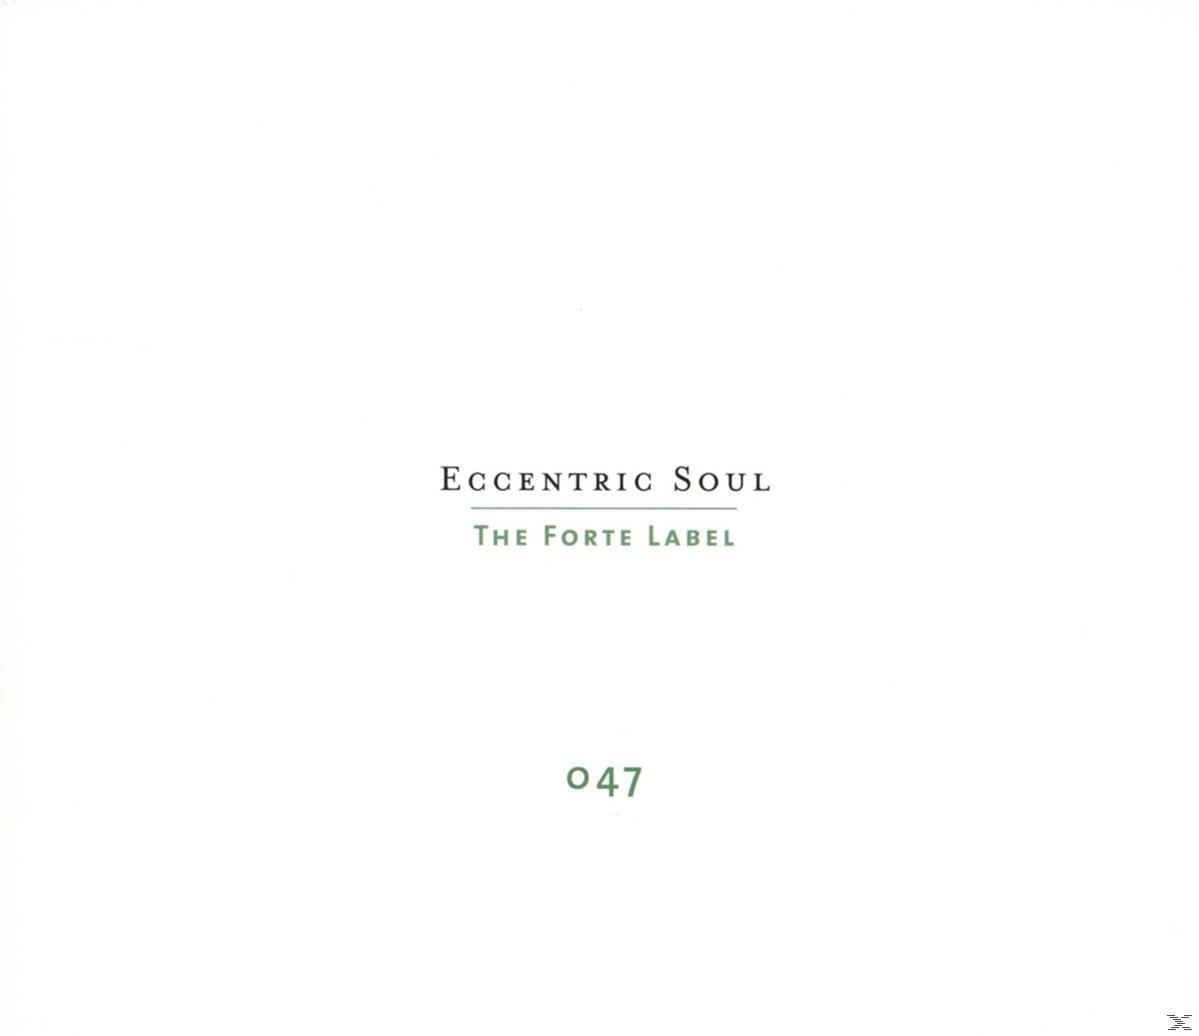 (the Eccentric Soul (CD) - Forte 15 Various - Label) Vol.